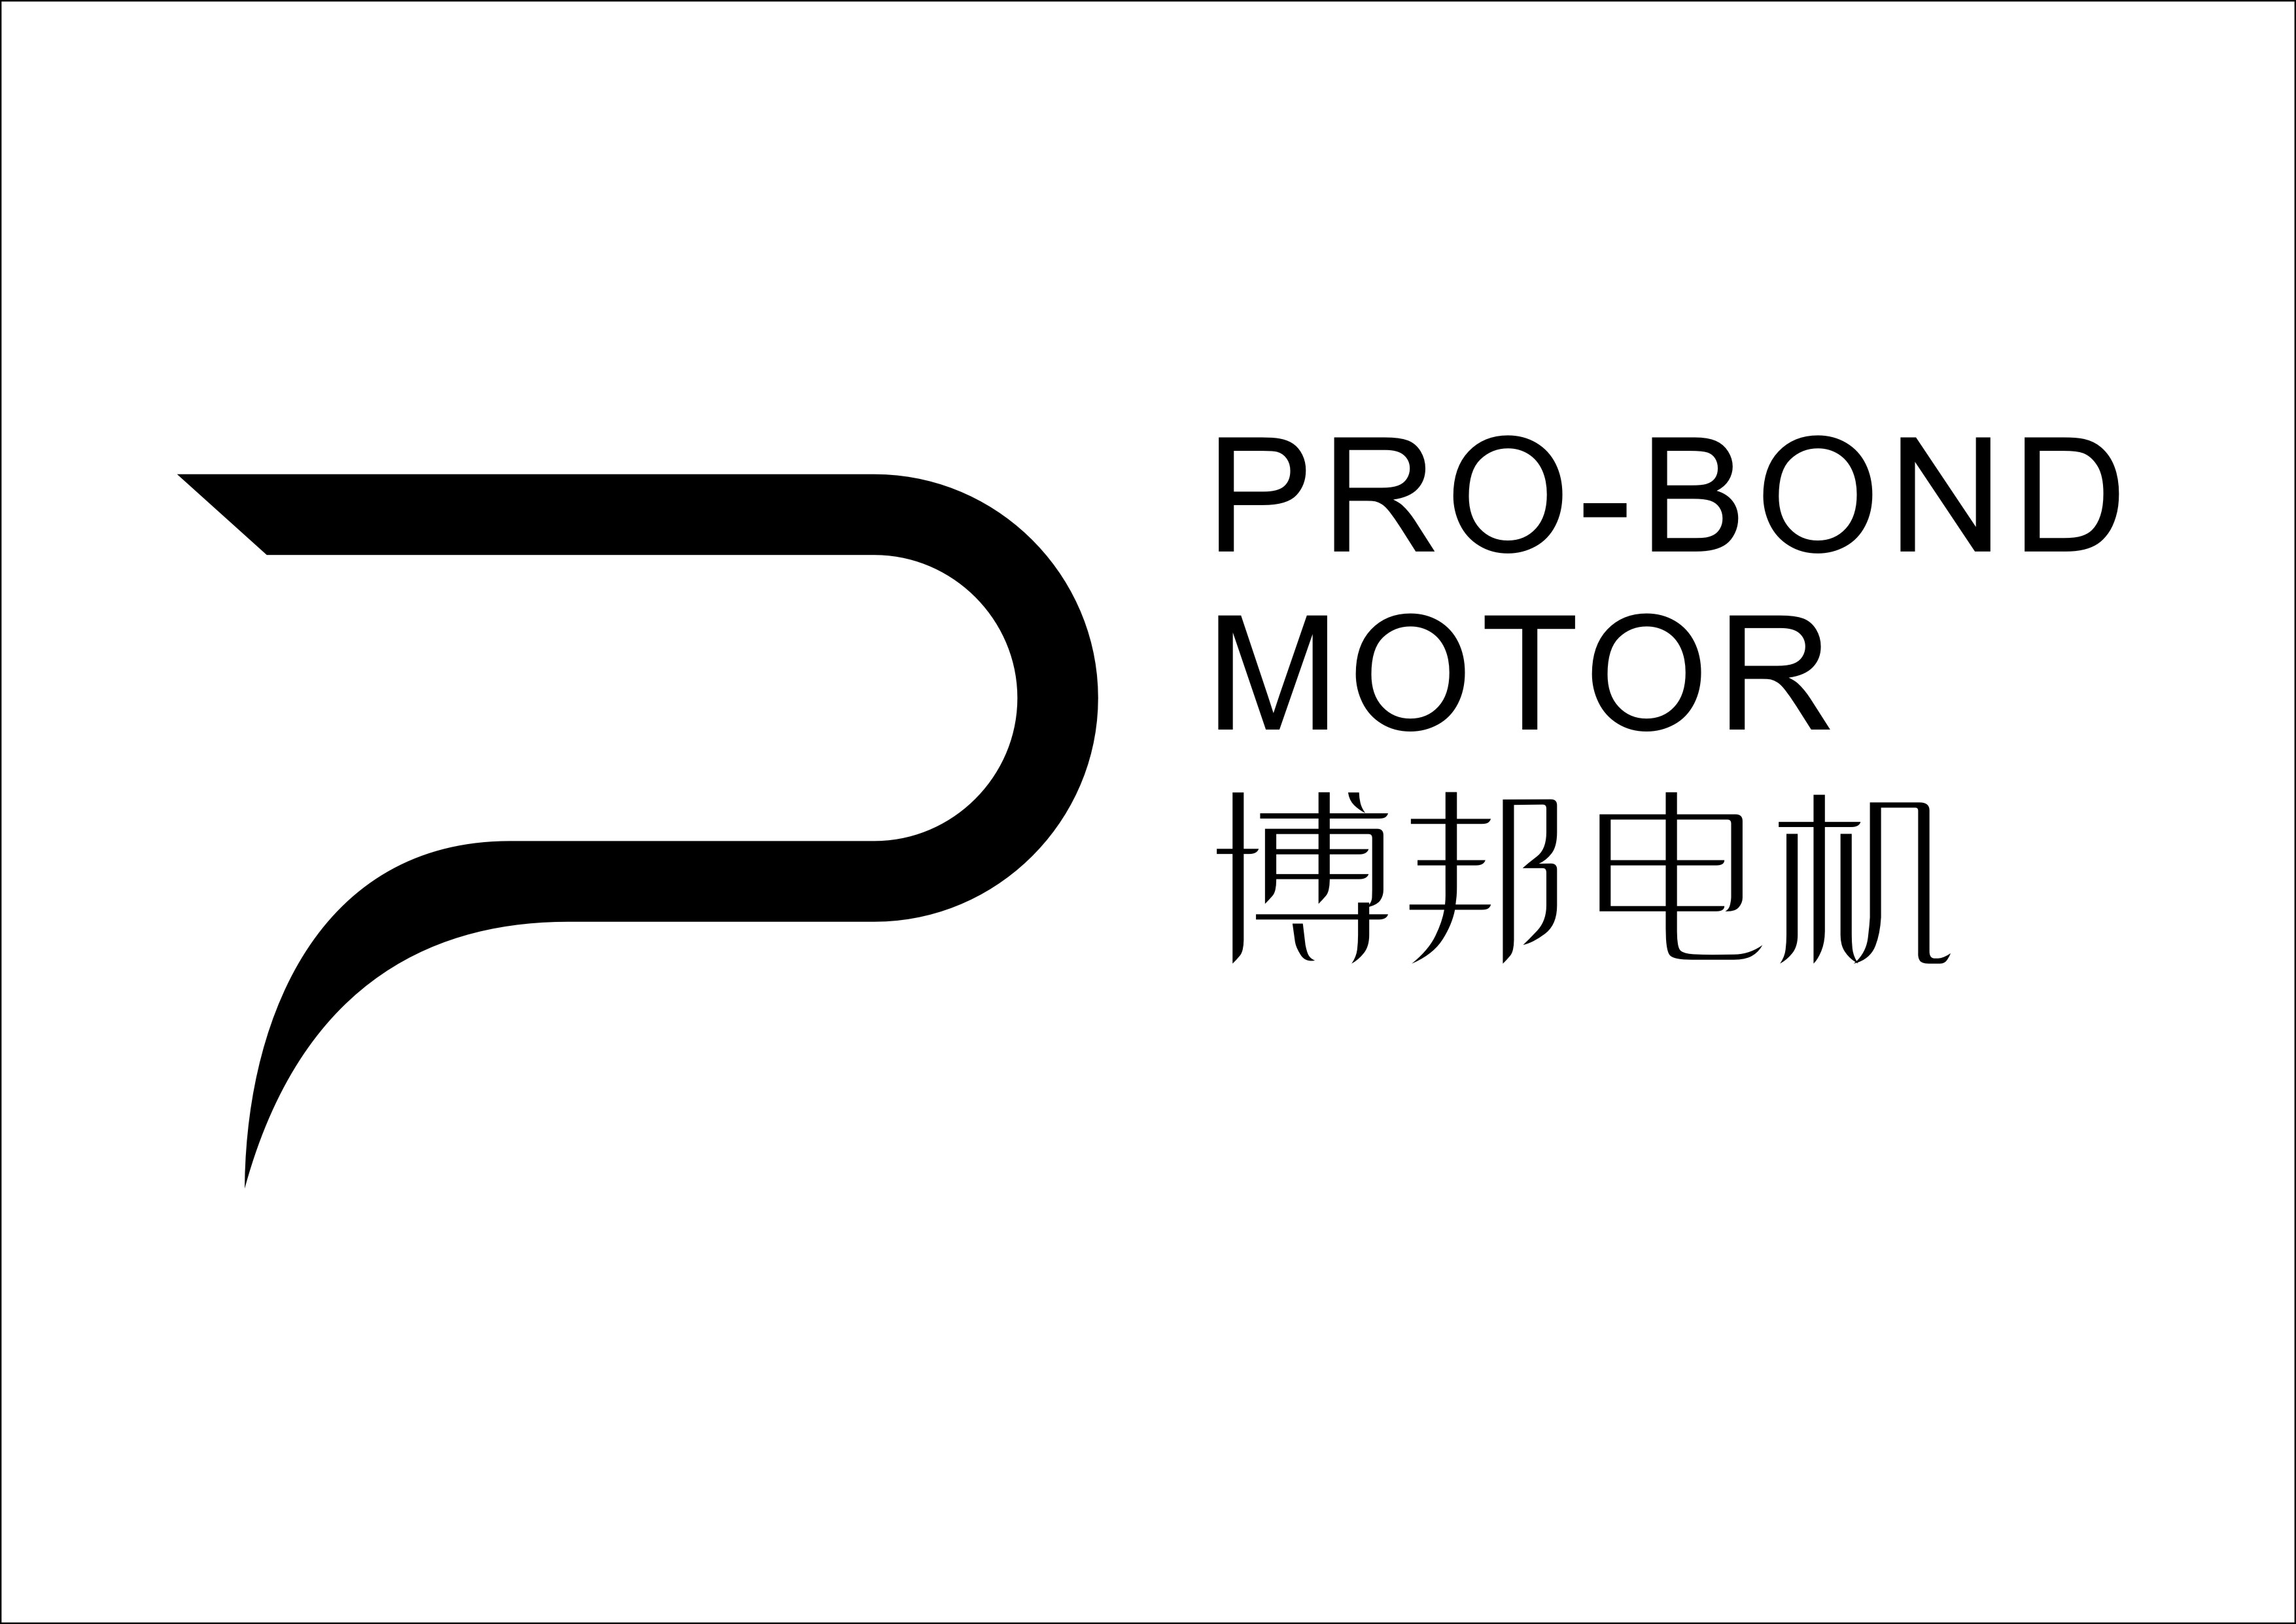 Changzhou Probond Motor Co. Ltd